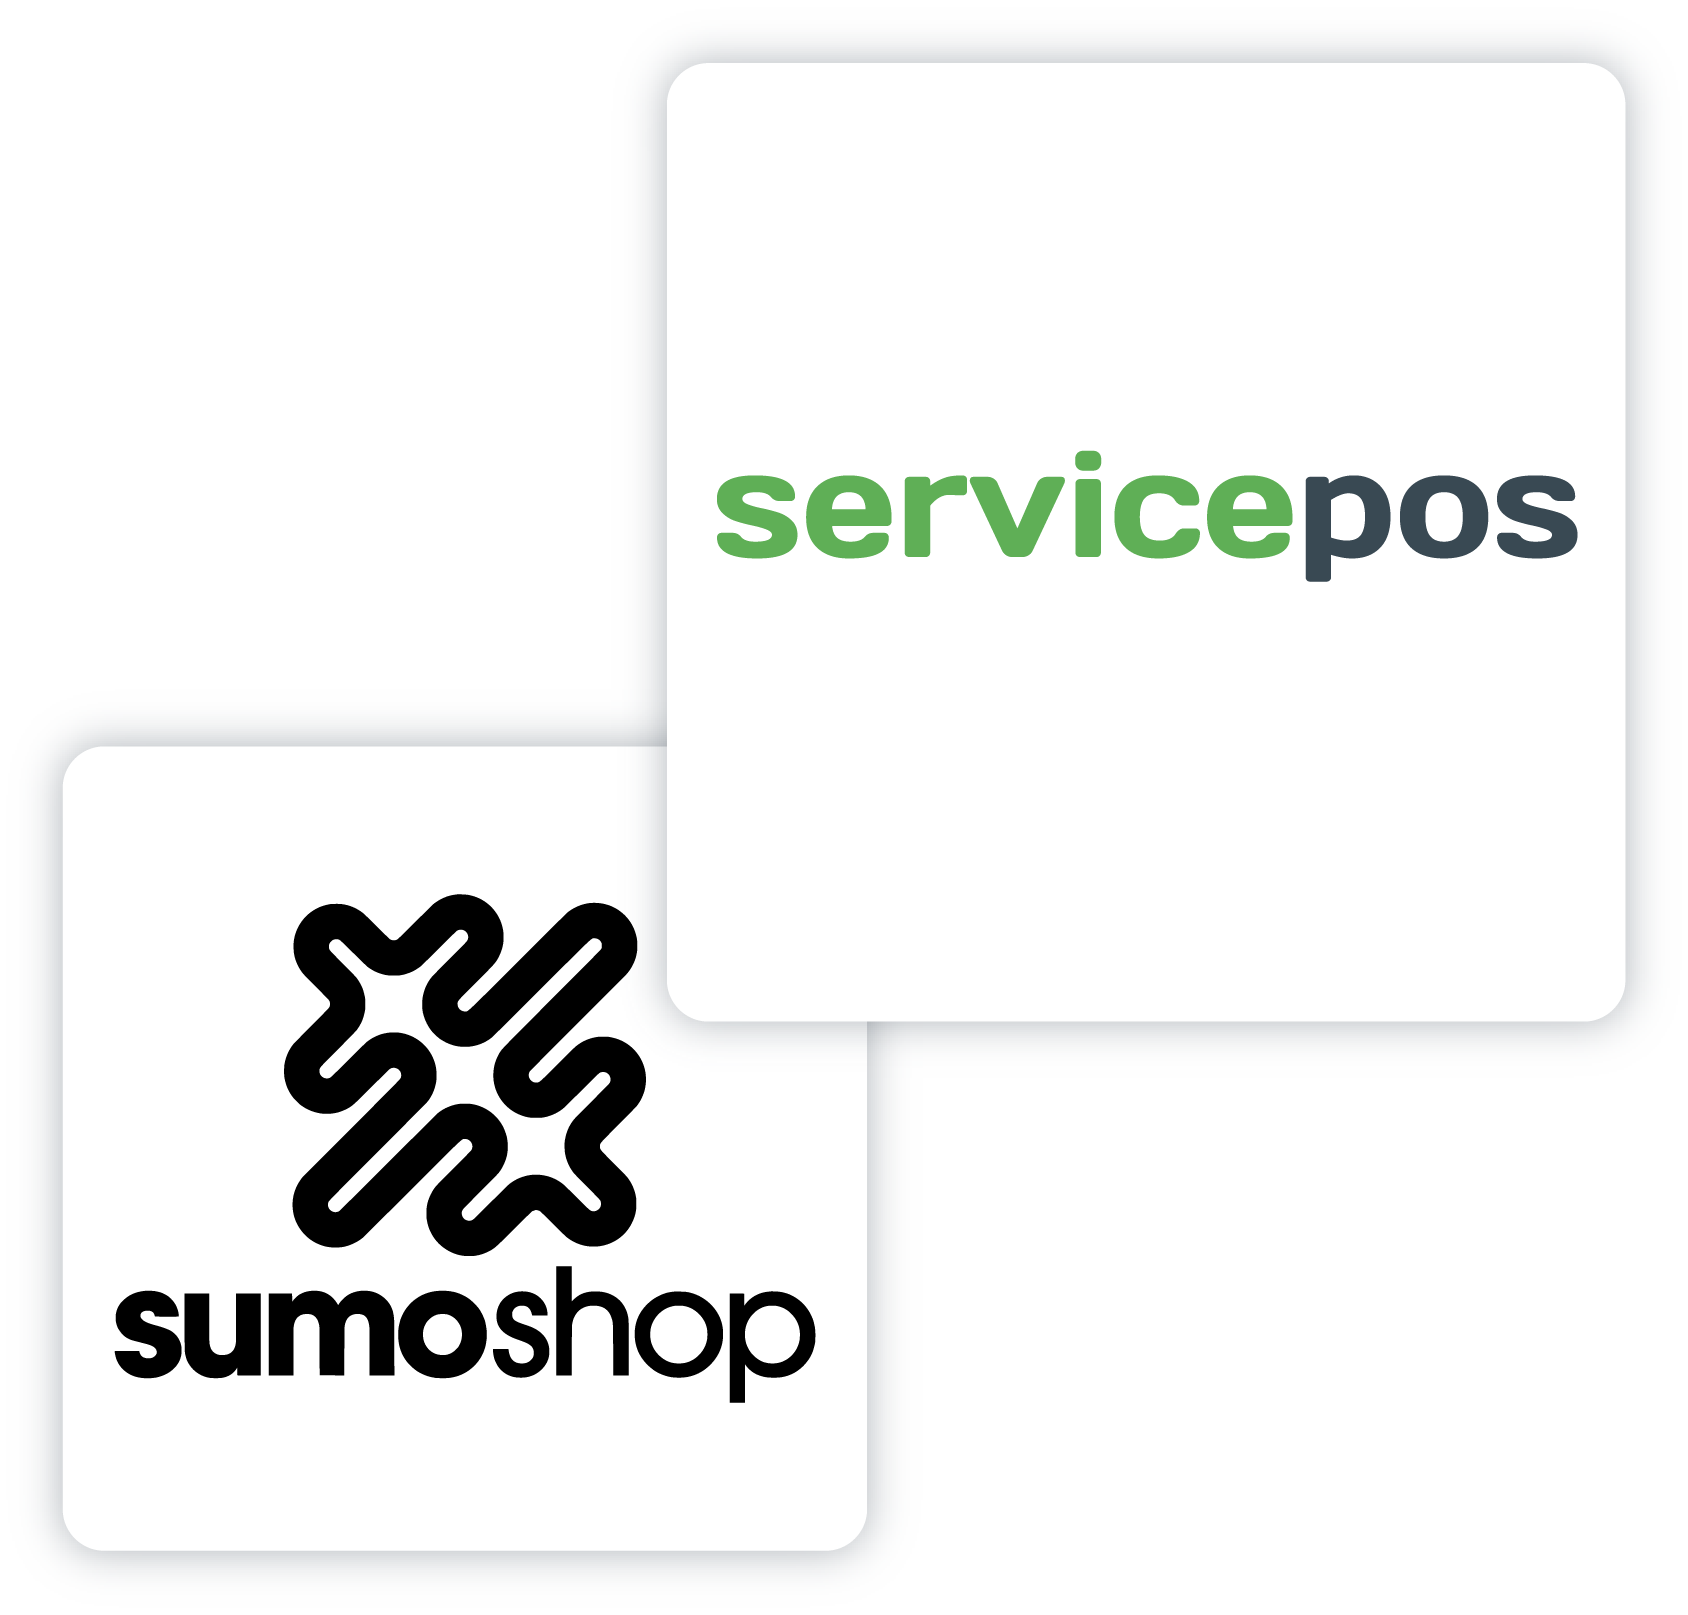 SUMOshop og Servicepos